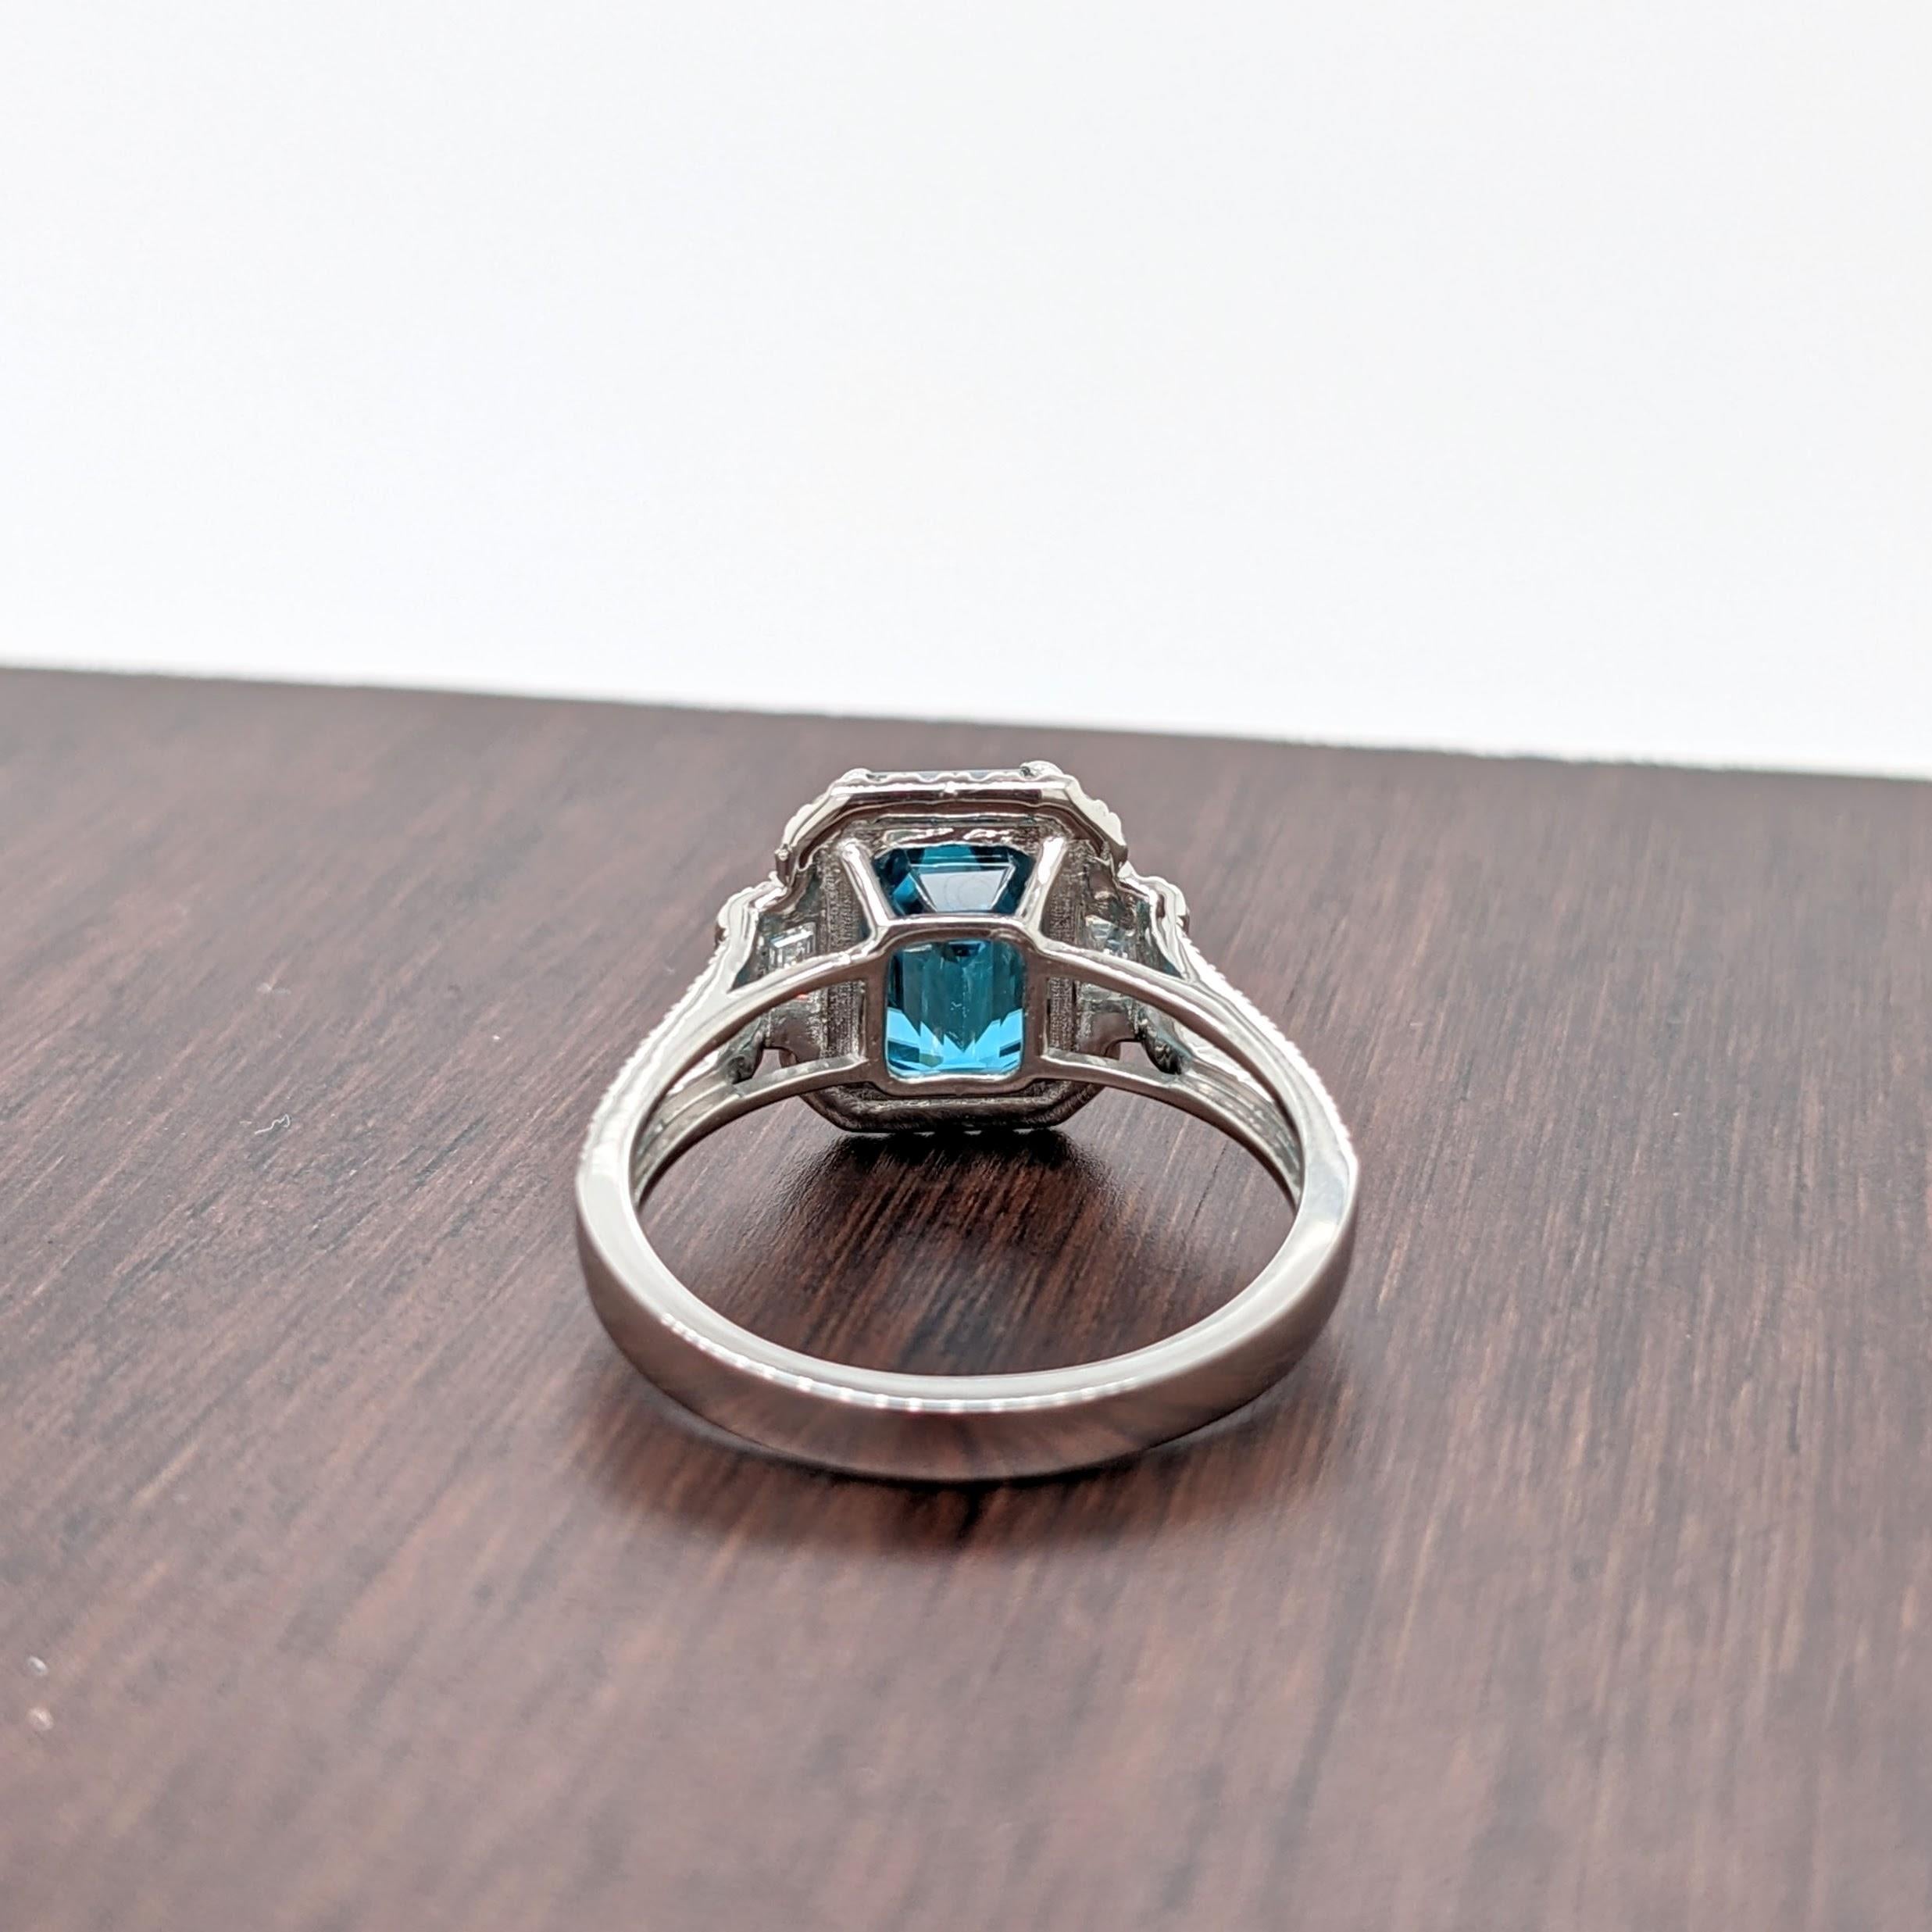 5.3ct Blue Zircon Ring in Platinum w Natural Diamonds Emerald Cut 9x7mm 1